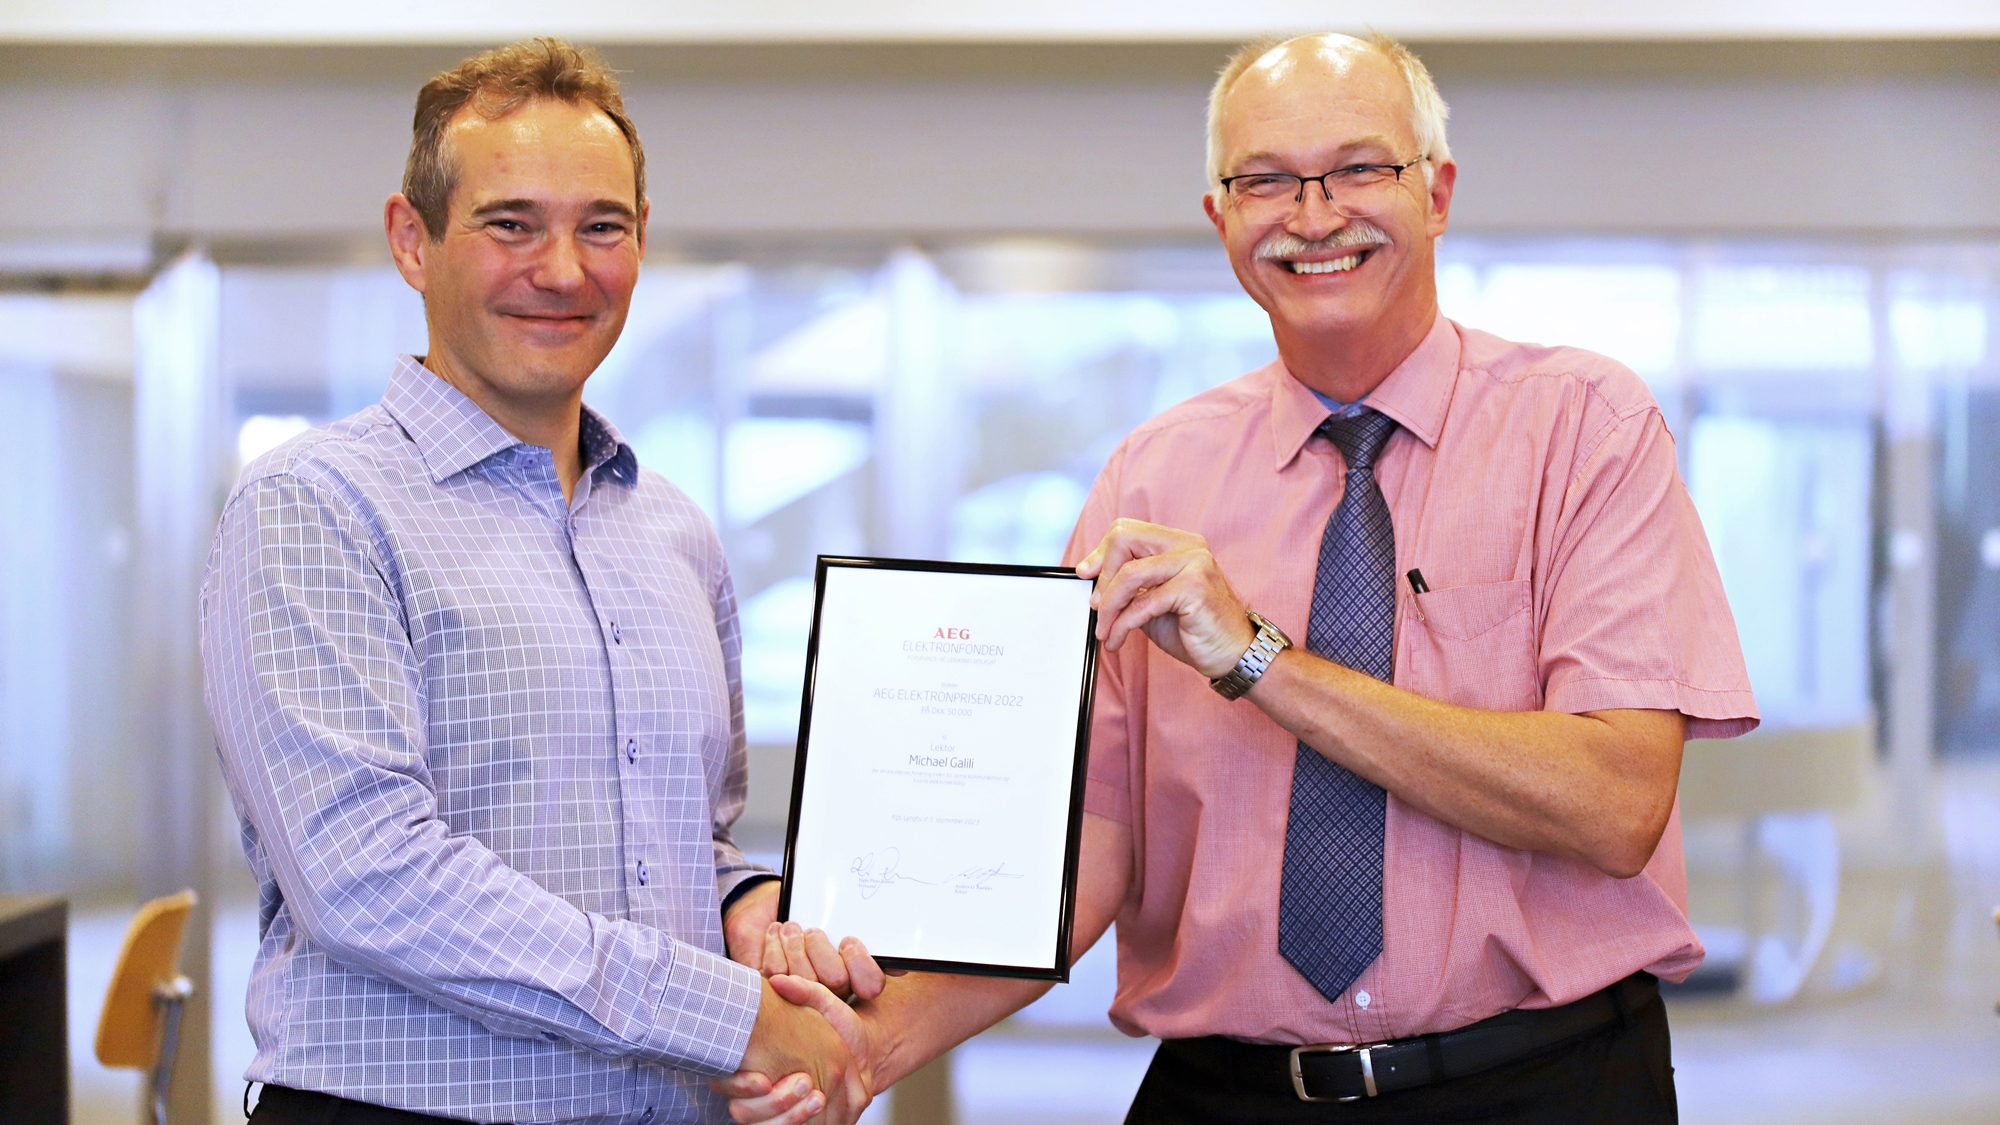 Associate professor Michael Galili is awarded AEG Elektronprisen 2023, photographed holding the certificate shaking hands with the President og DTU Anders Bjarklev